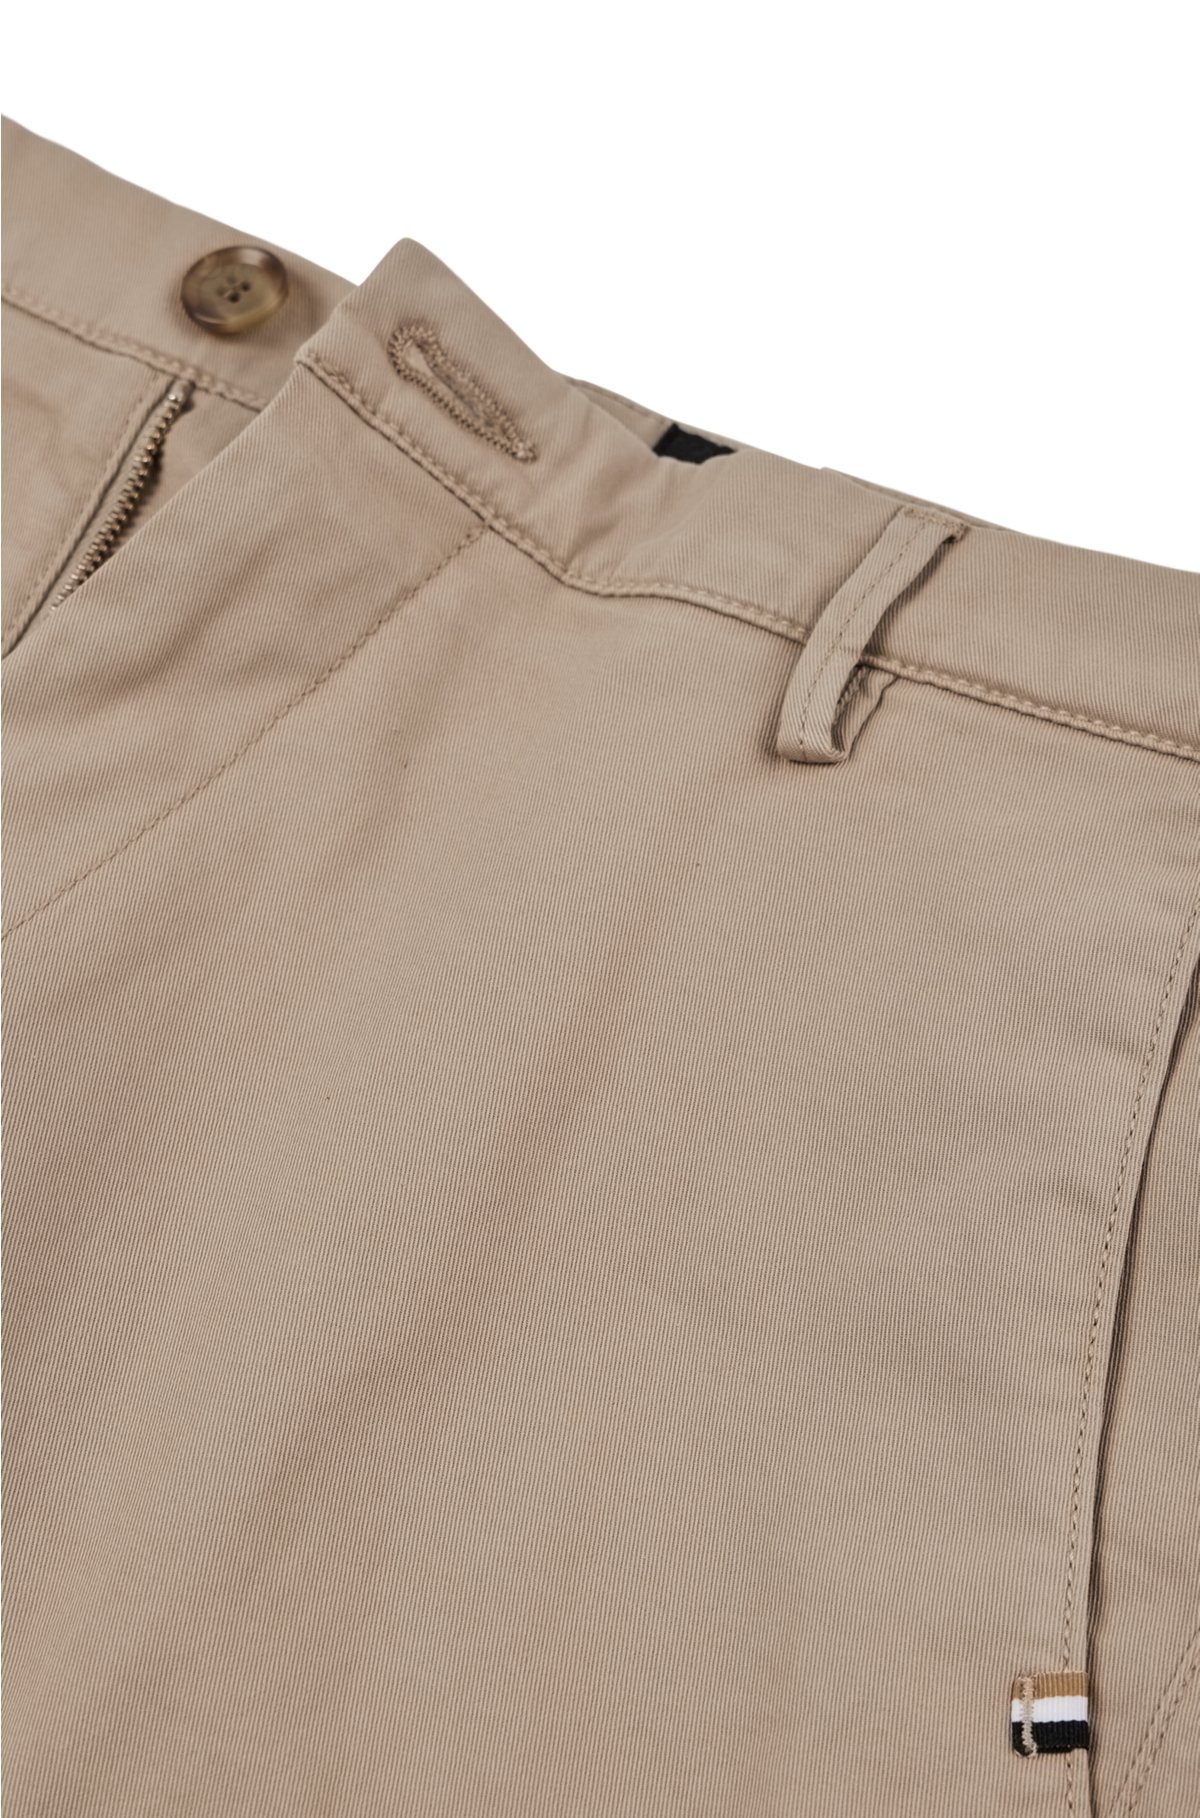 Sentino - Tan - Stretch Cotton Dress Chinos, Suit Pants